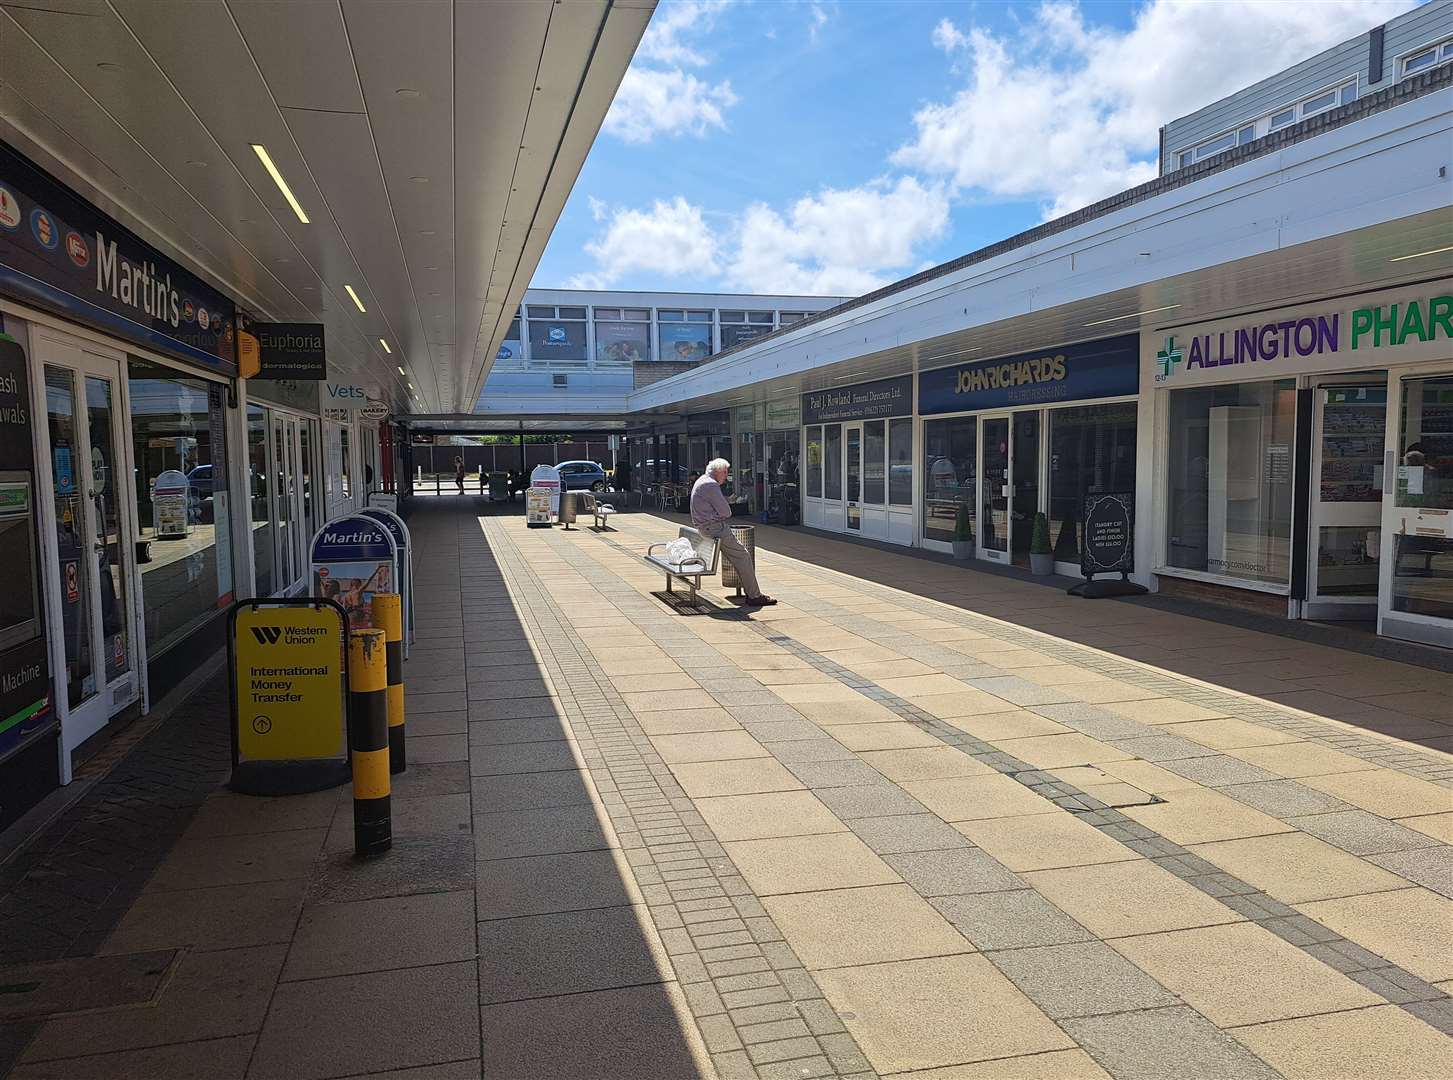 The Mid Kent Shopping Centre at Allington